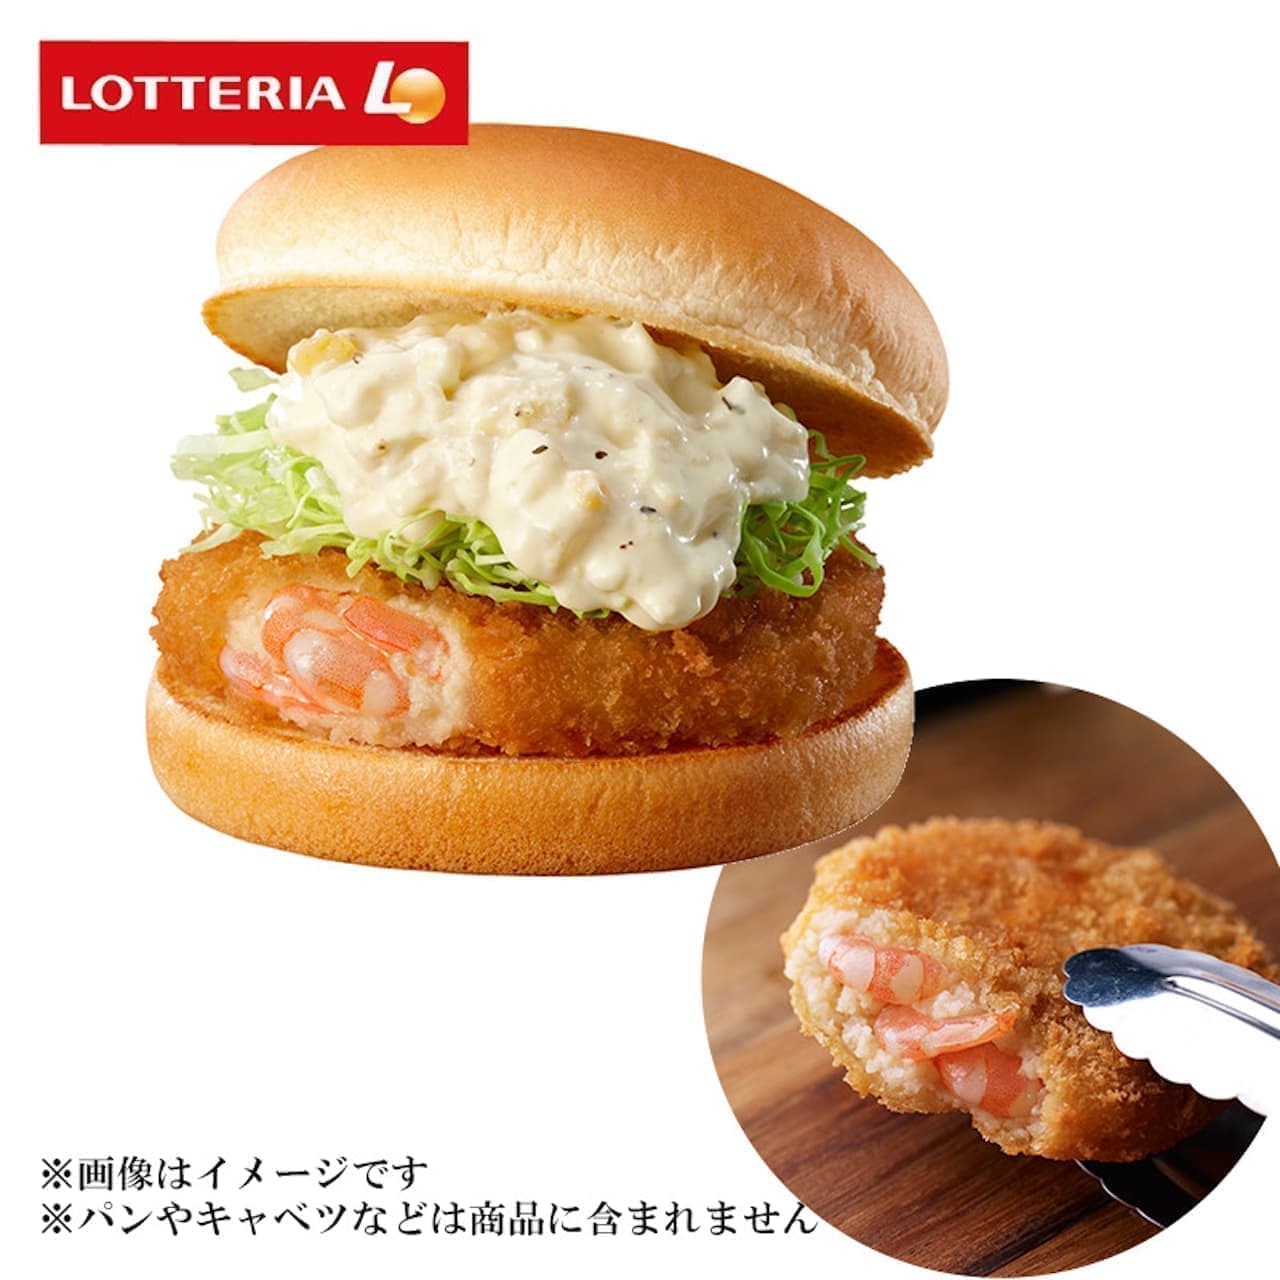 Lotteria's "20 shrimp patties"